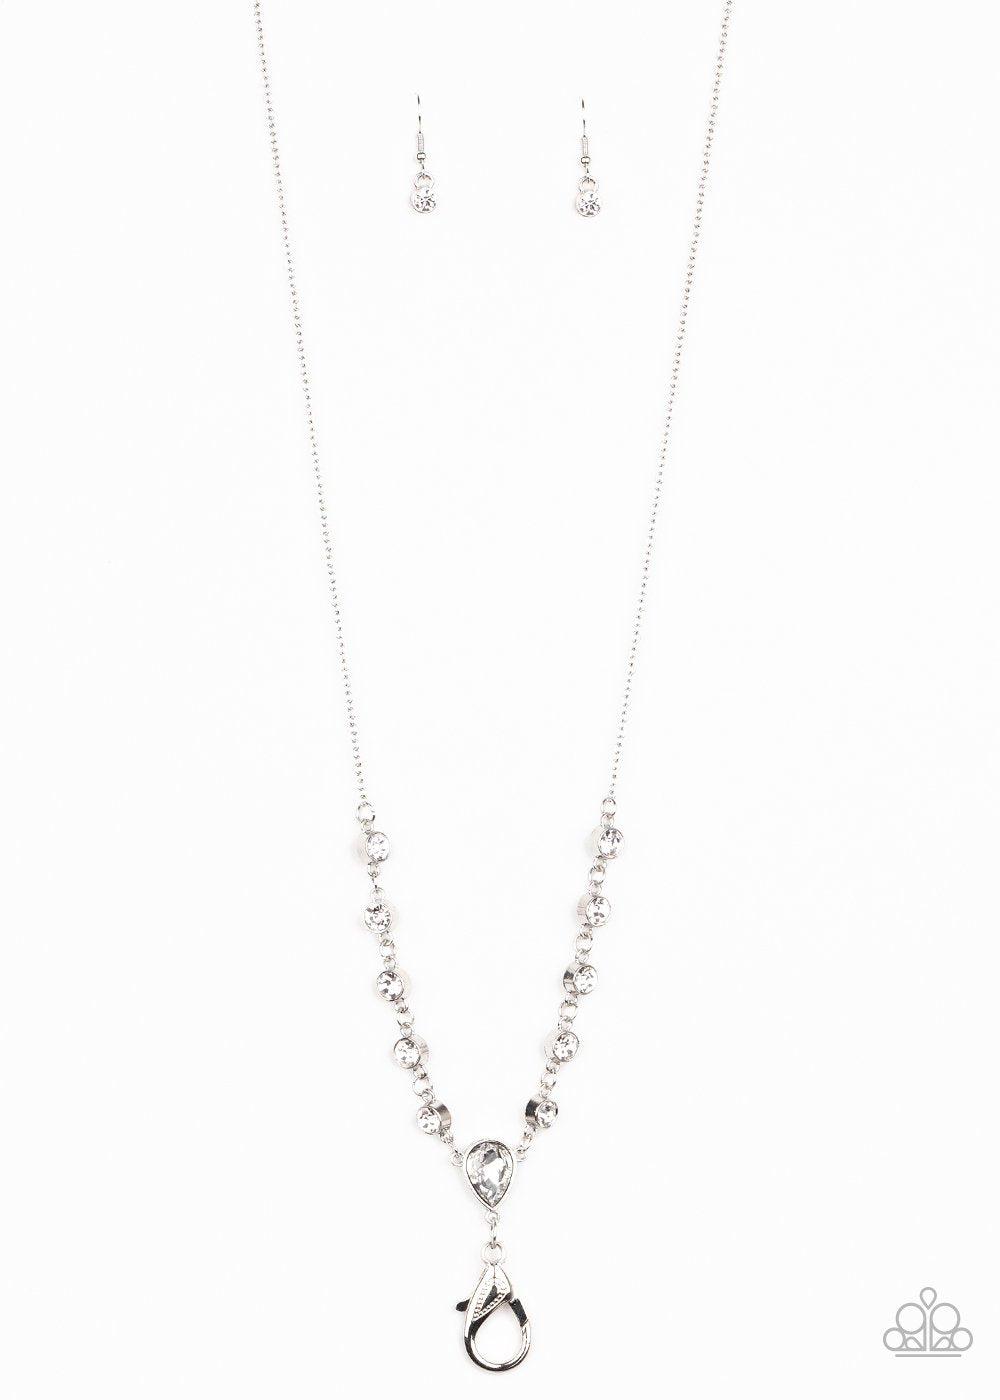 Unfathomable Fierceness White Rhinestone Lanyard Necklace - Paparazzi Accessories- lightbox - CarasShop.com - $5 Jewelry by Cara Jewels